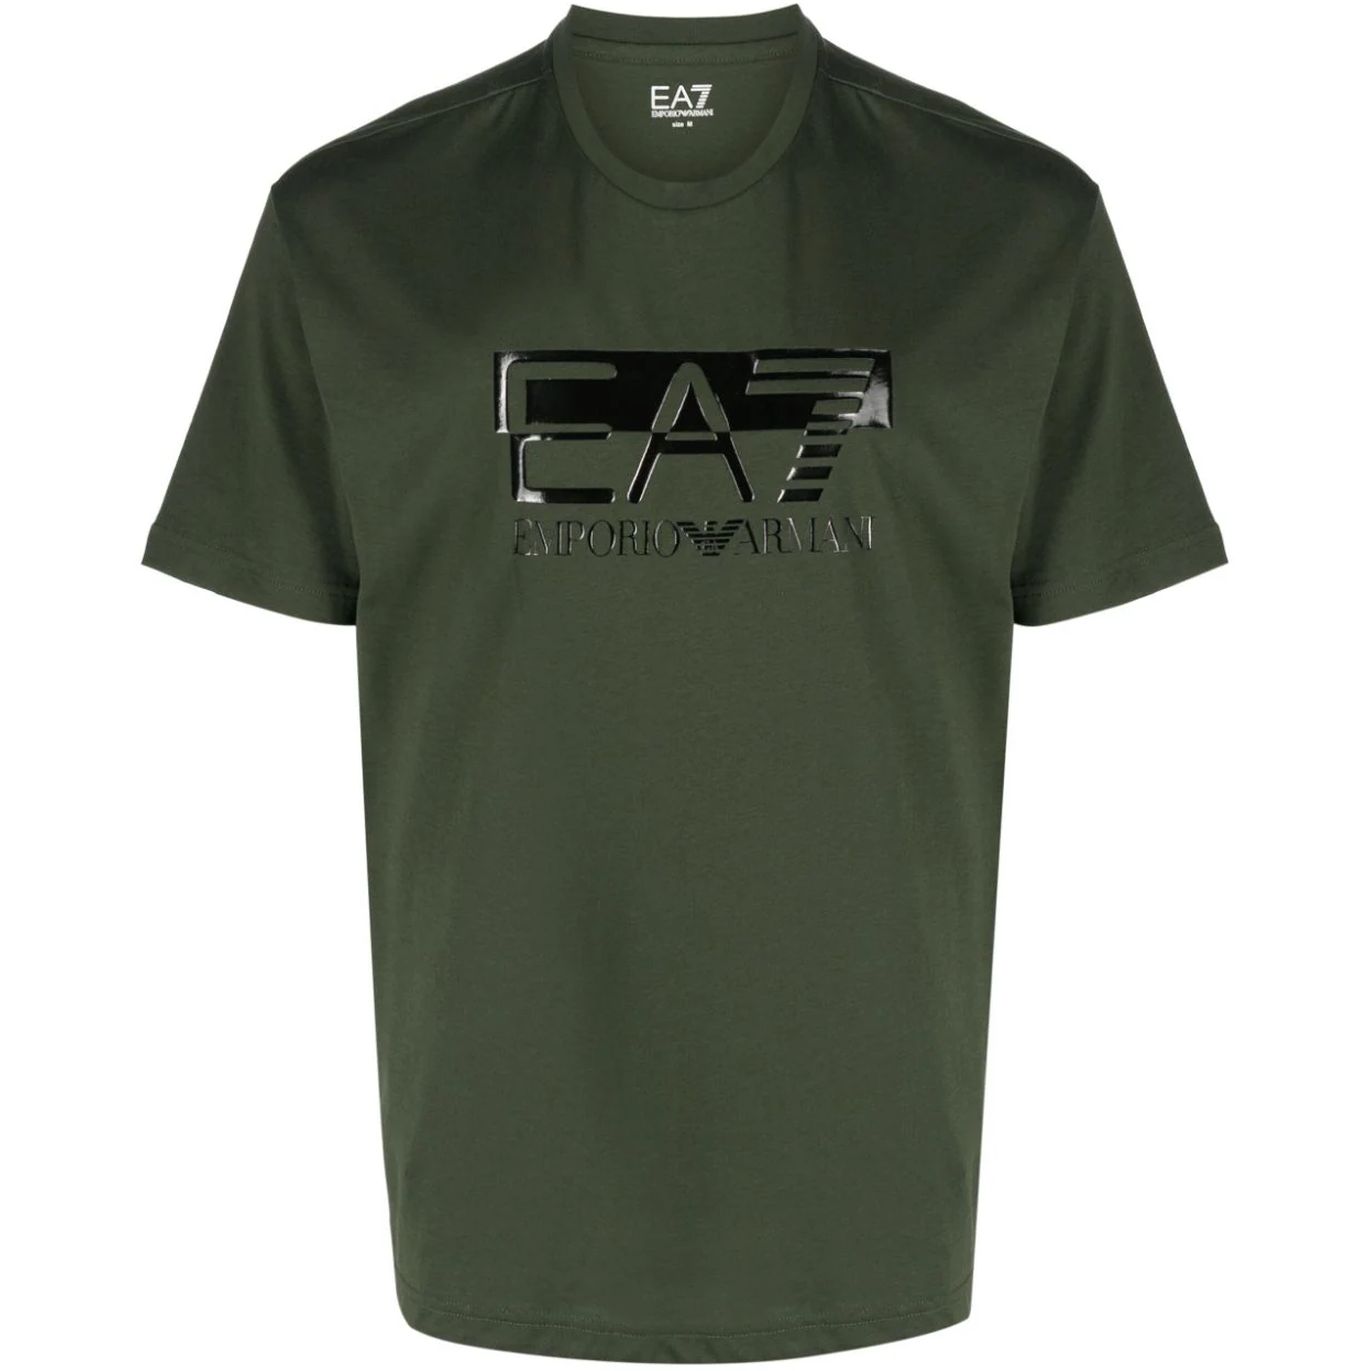 EA7 vyriški žali marškinėliai trumpomis rankovėmis T-shirt